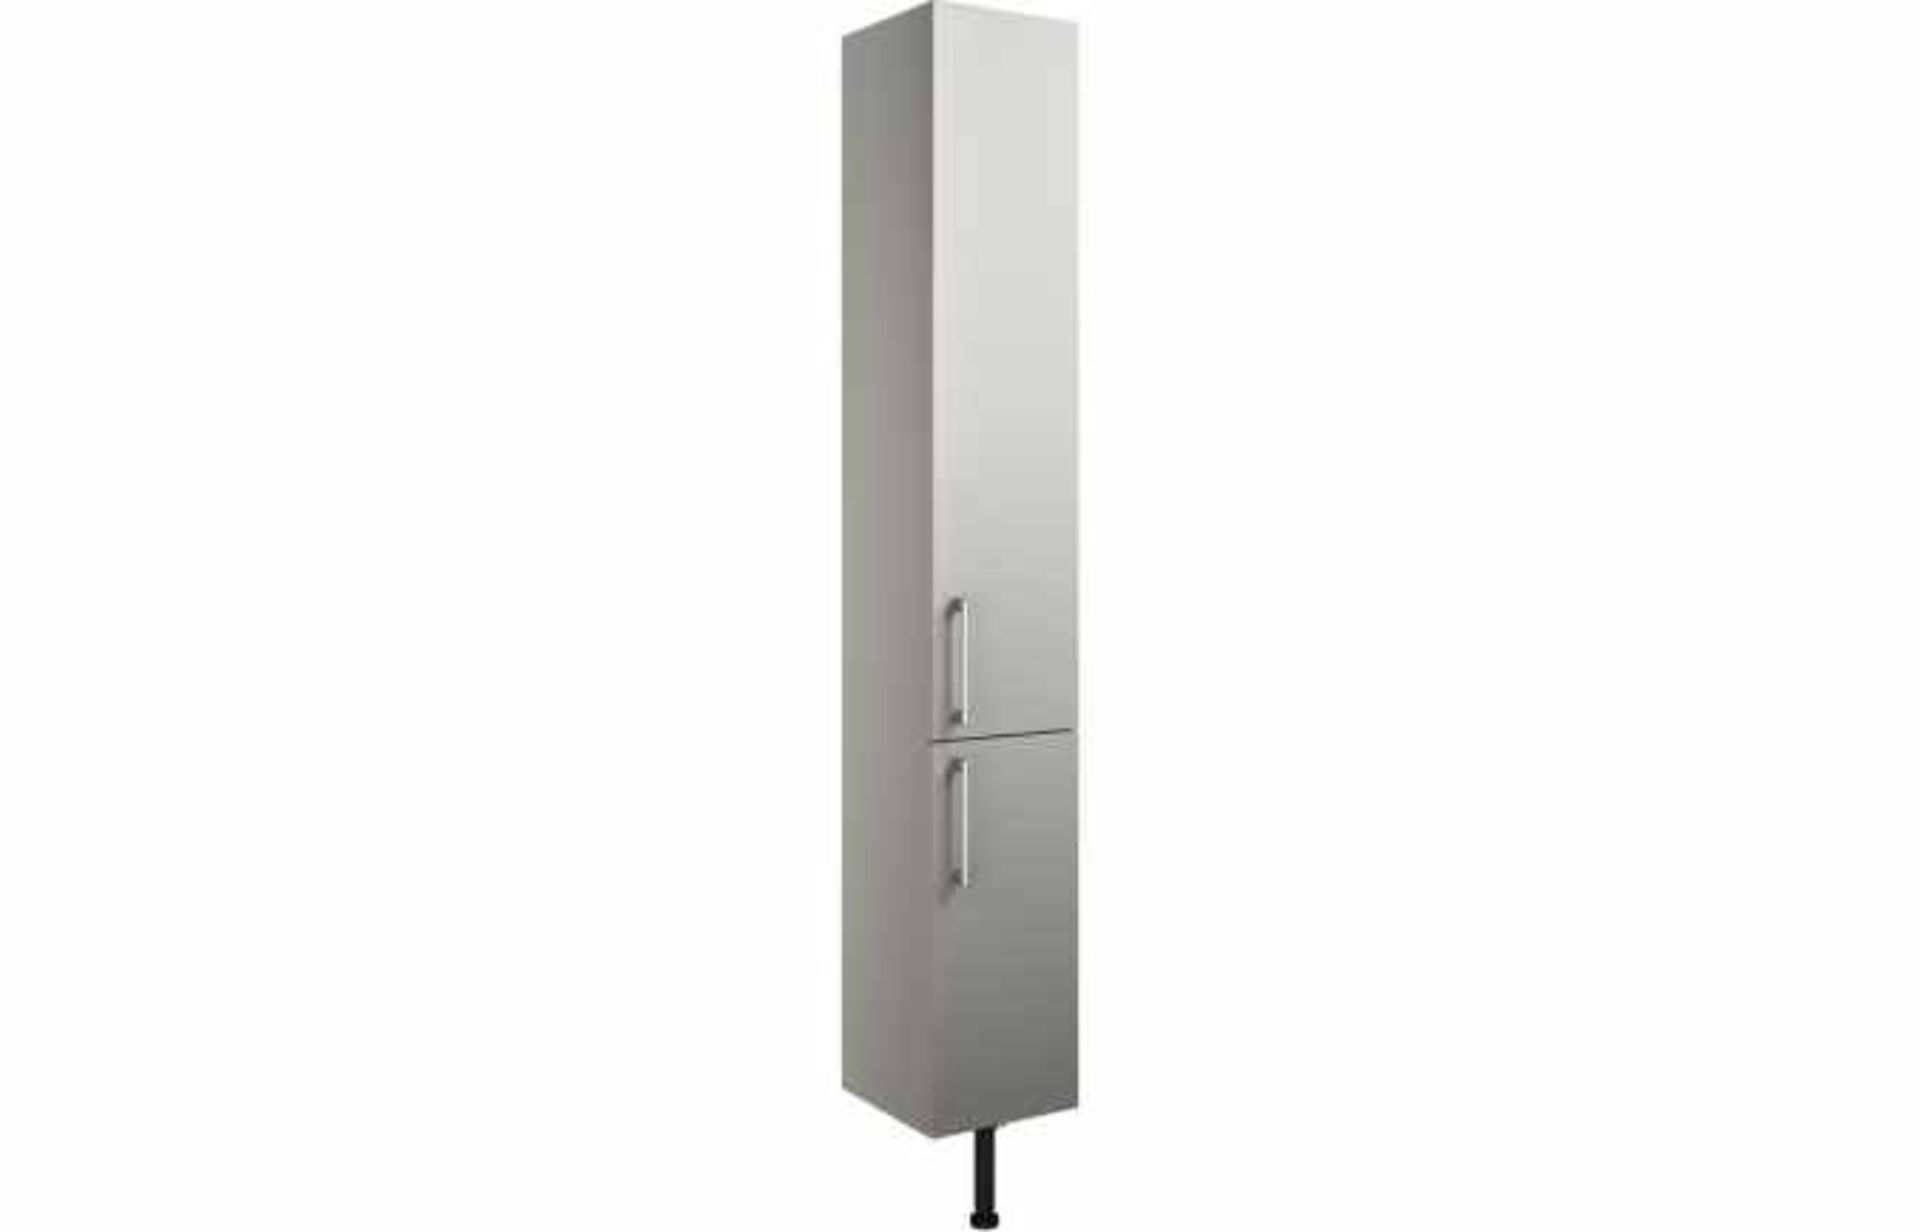 New (R19) Alba 300 mm 2 Door Tall Unit - Light Grey Gloss. RRP £375.00. Durable 18 mm Cabinet, S...